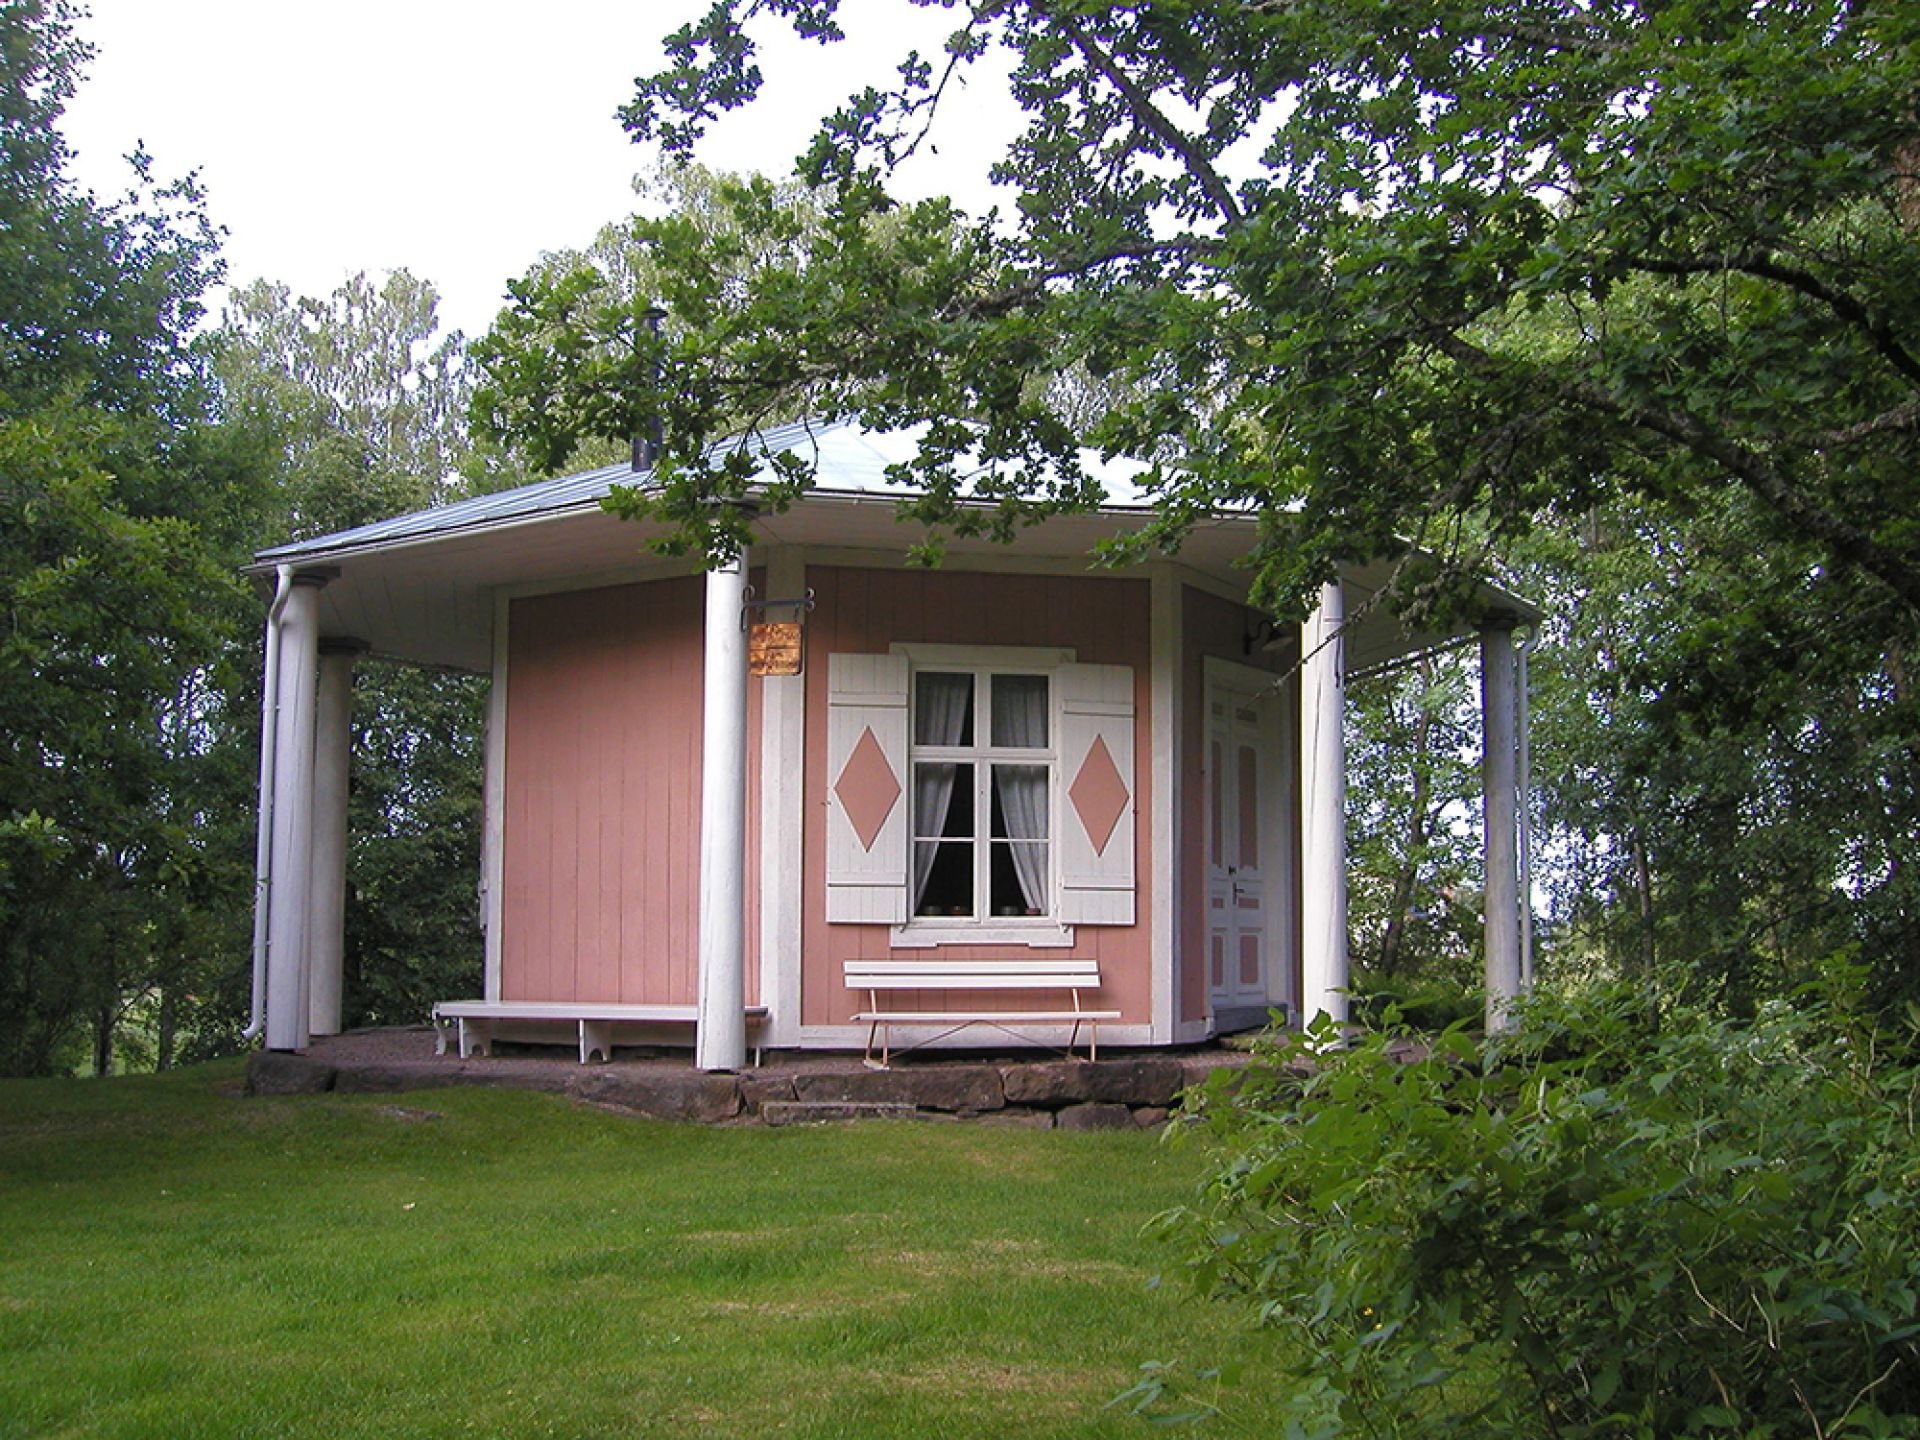 Paviljonen i Lundsholmsparken